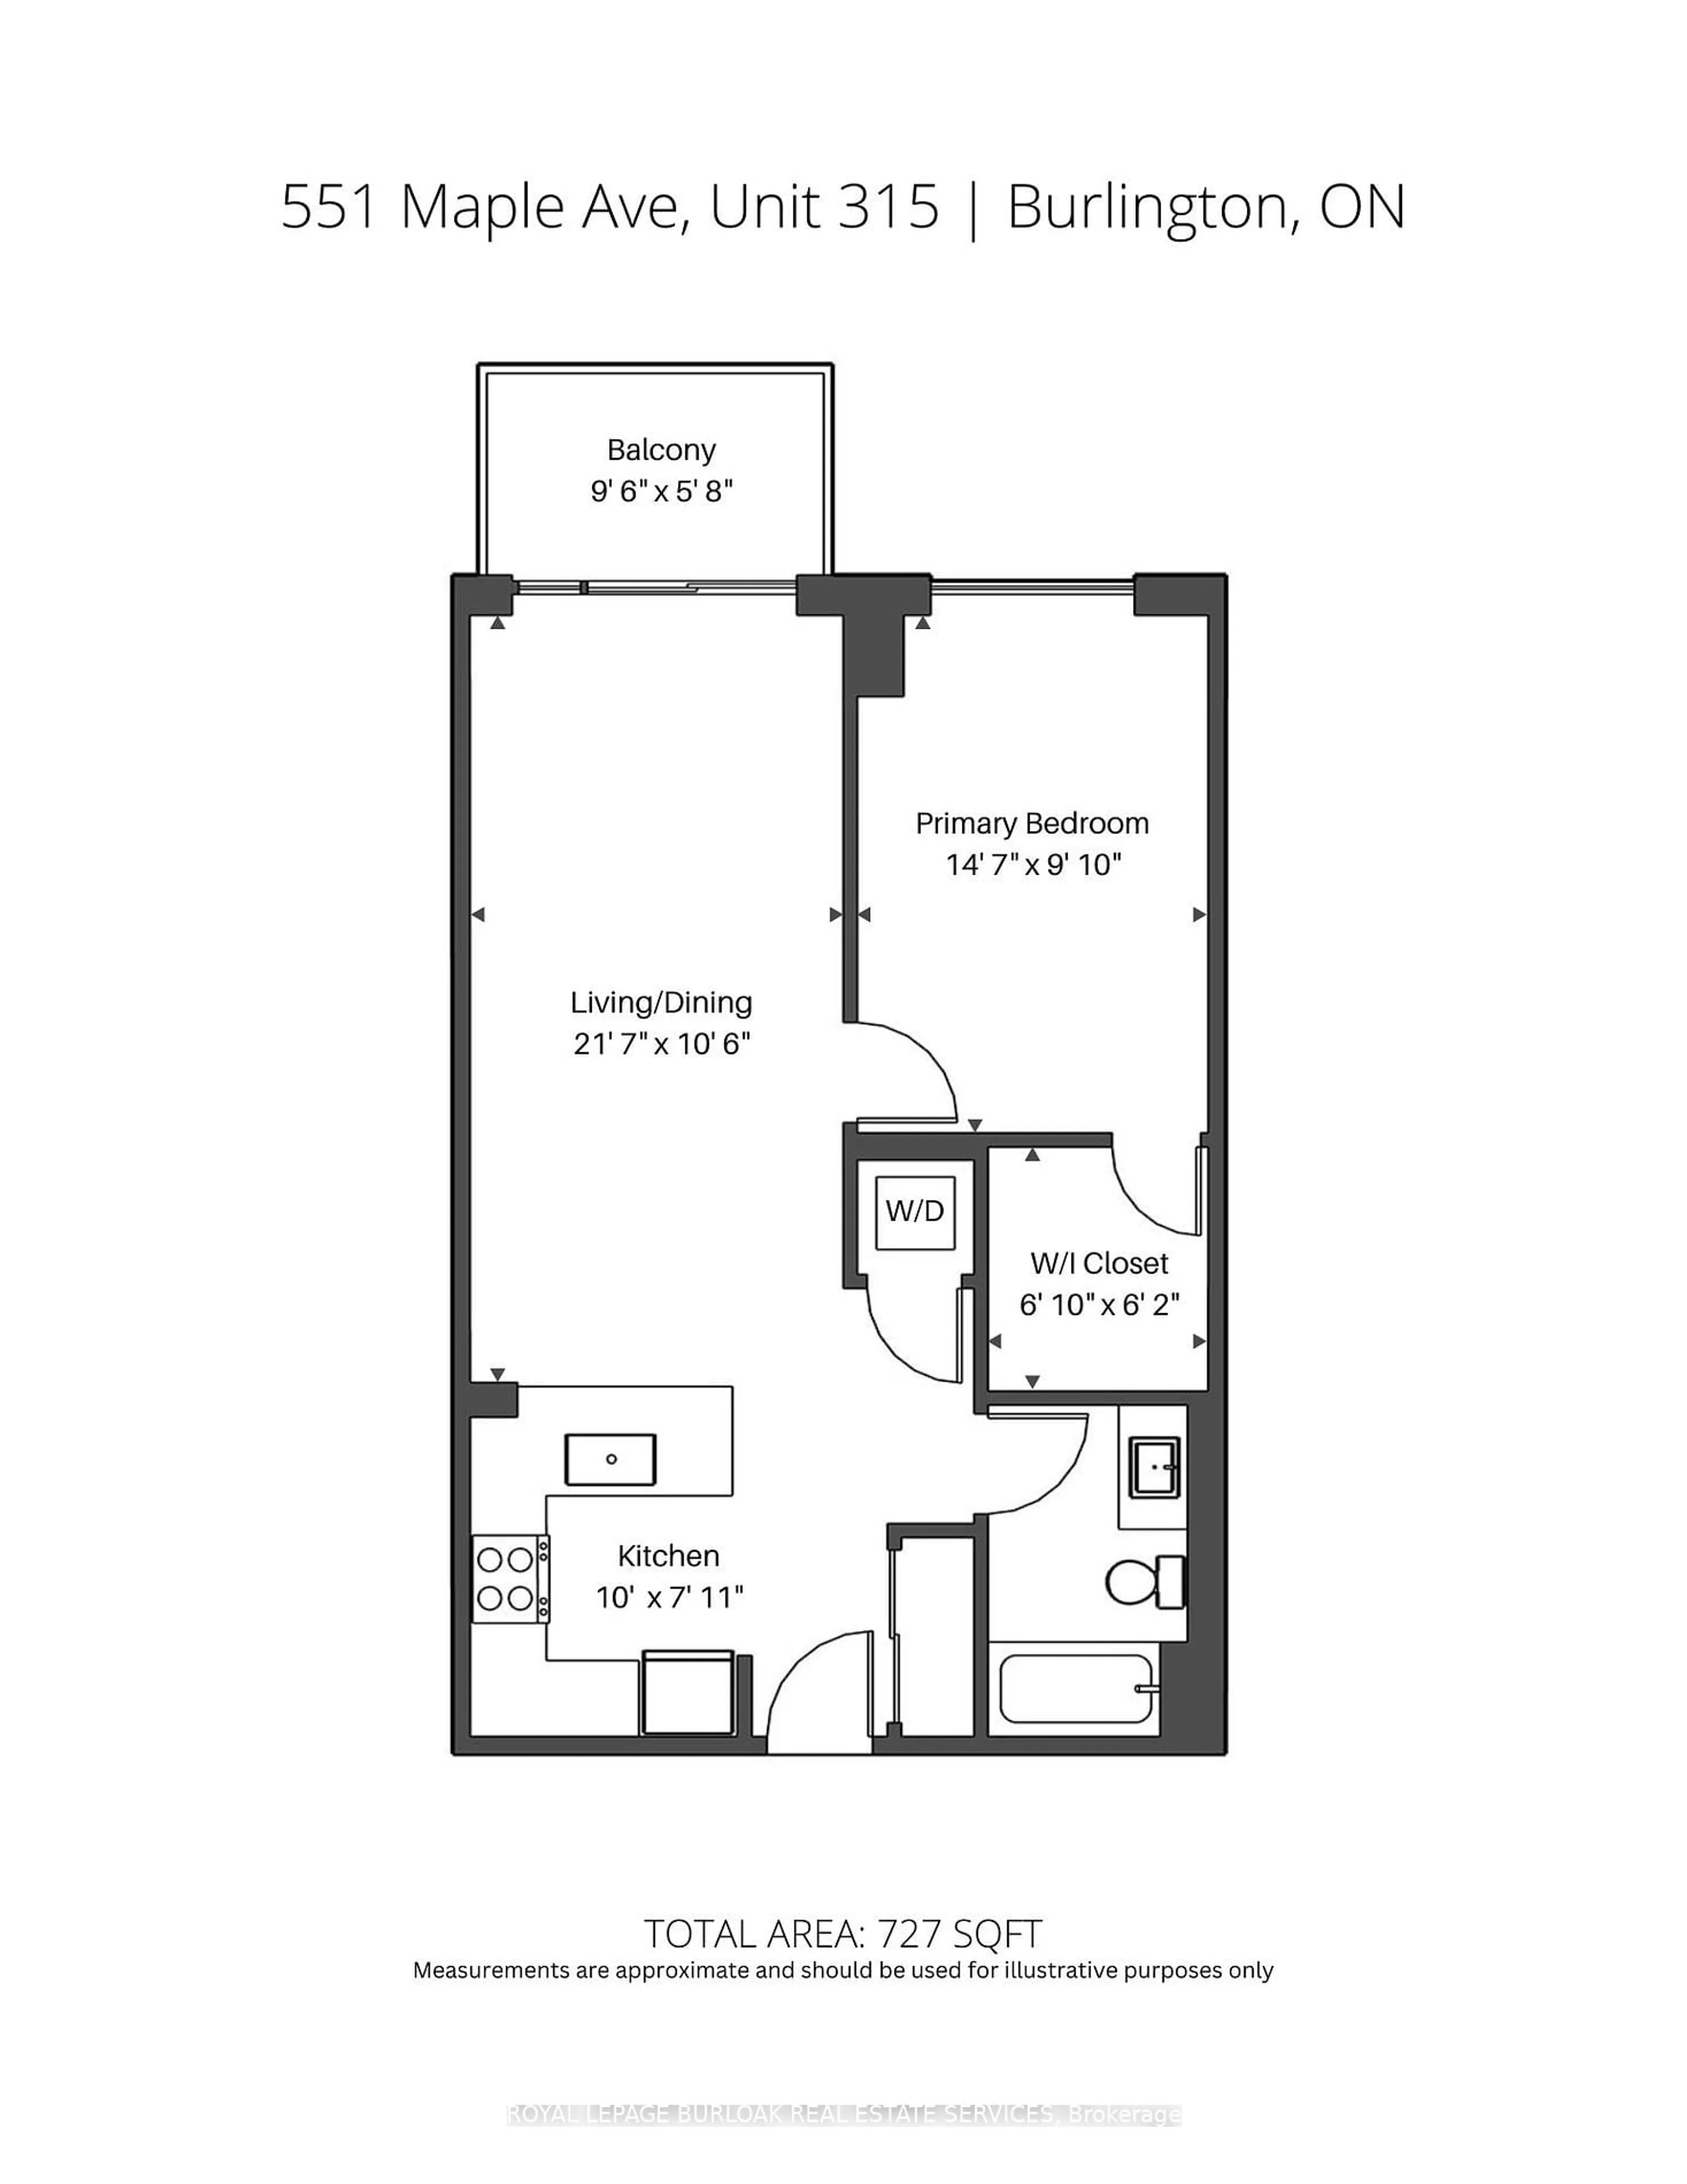 Floor plan for 551 Maple Ave #315, Burlington Ontario L7S 1M7